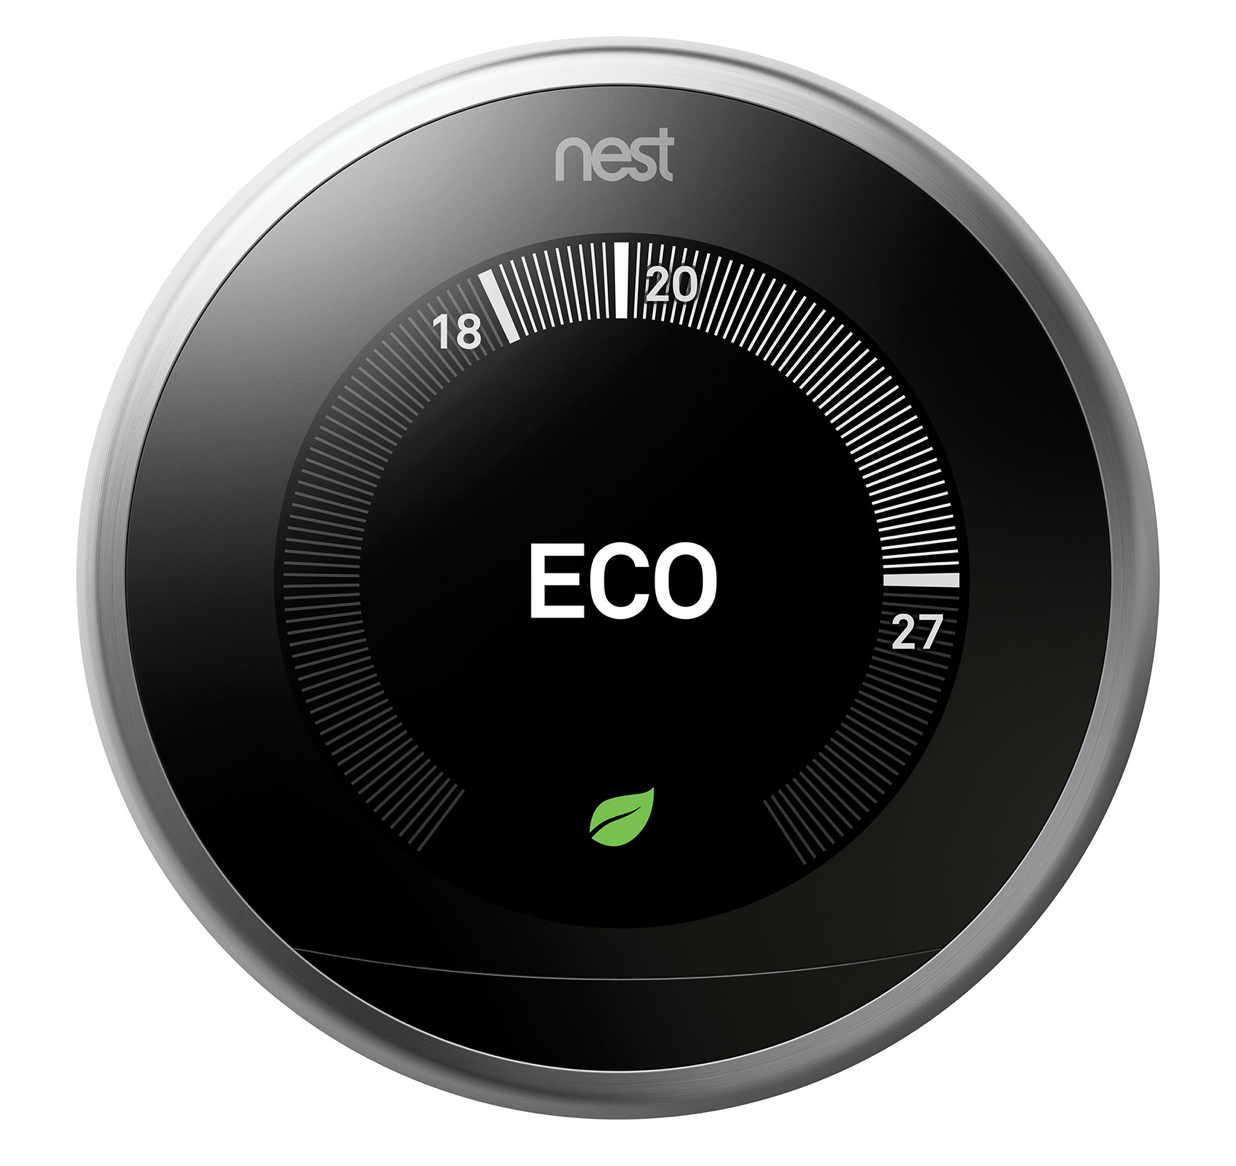 Google Nest smart thermostat showing eco mode.